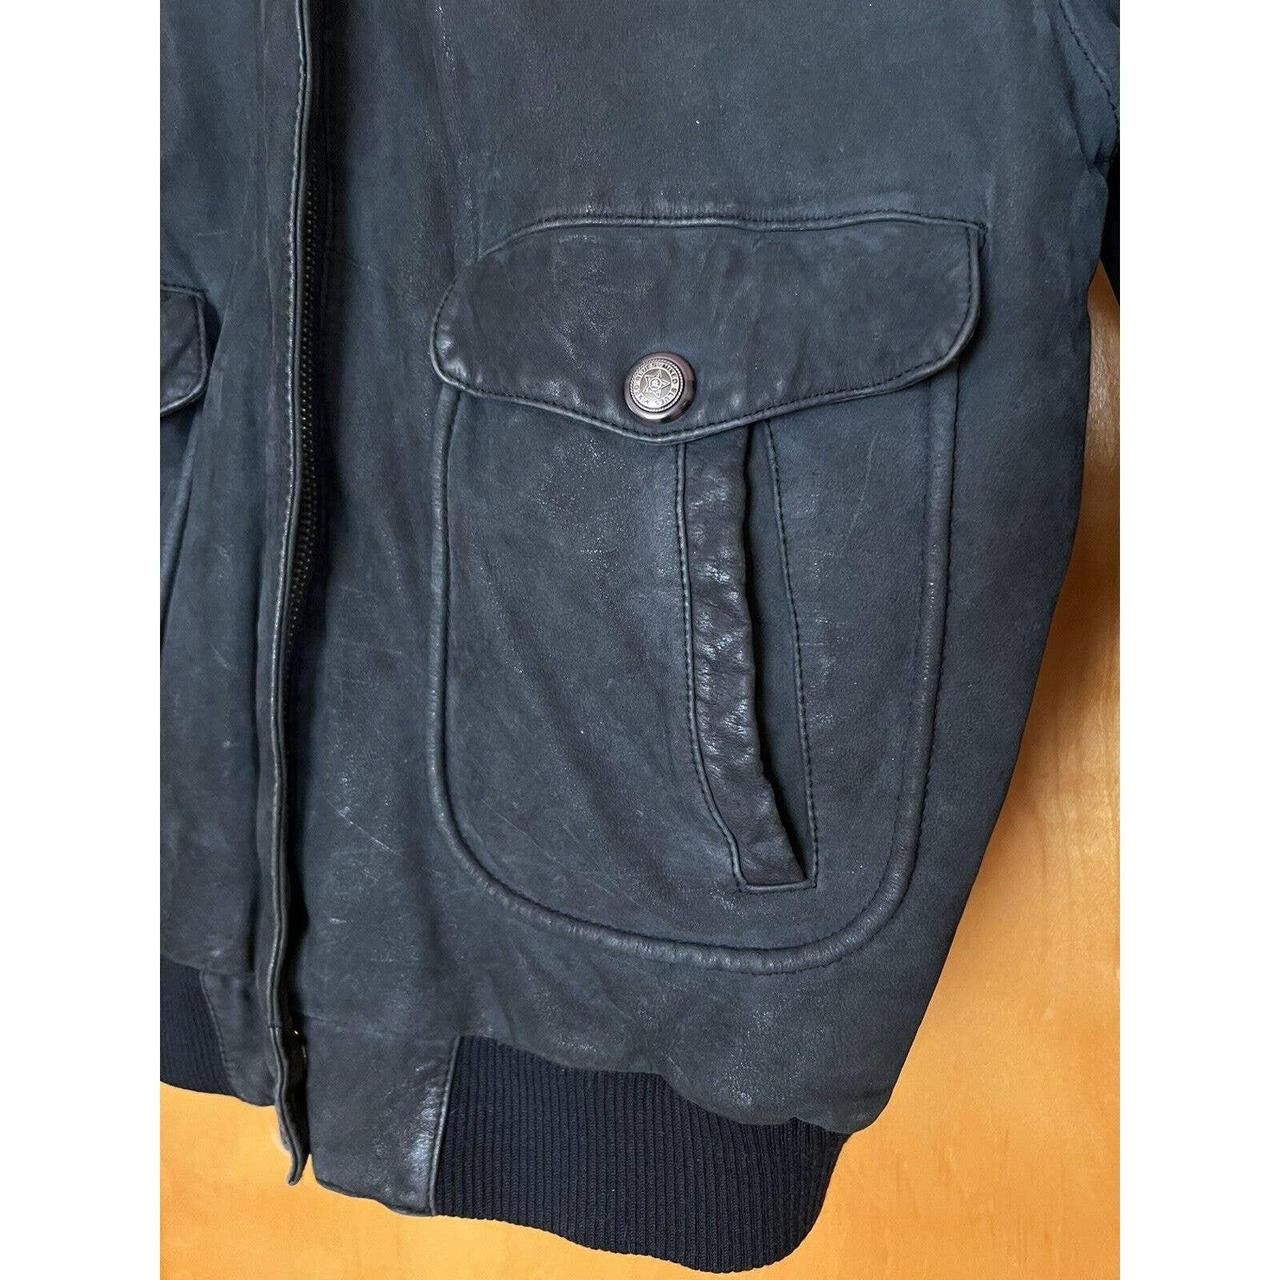 Louis Vuitton navy blue monogram bomber jacket coat - Depop